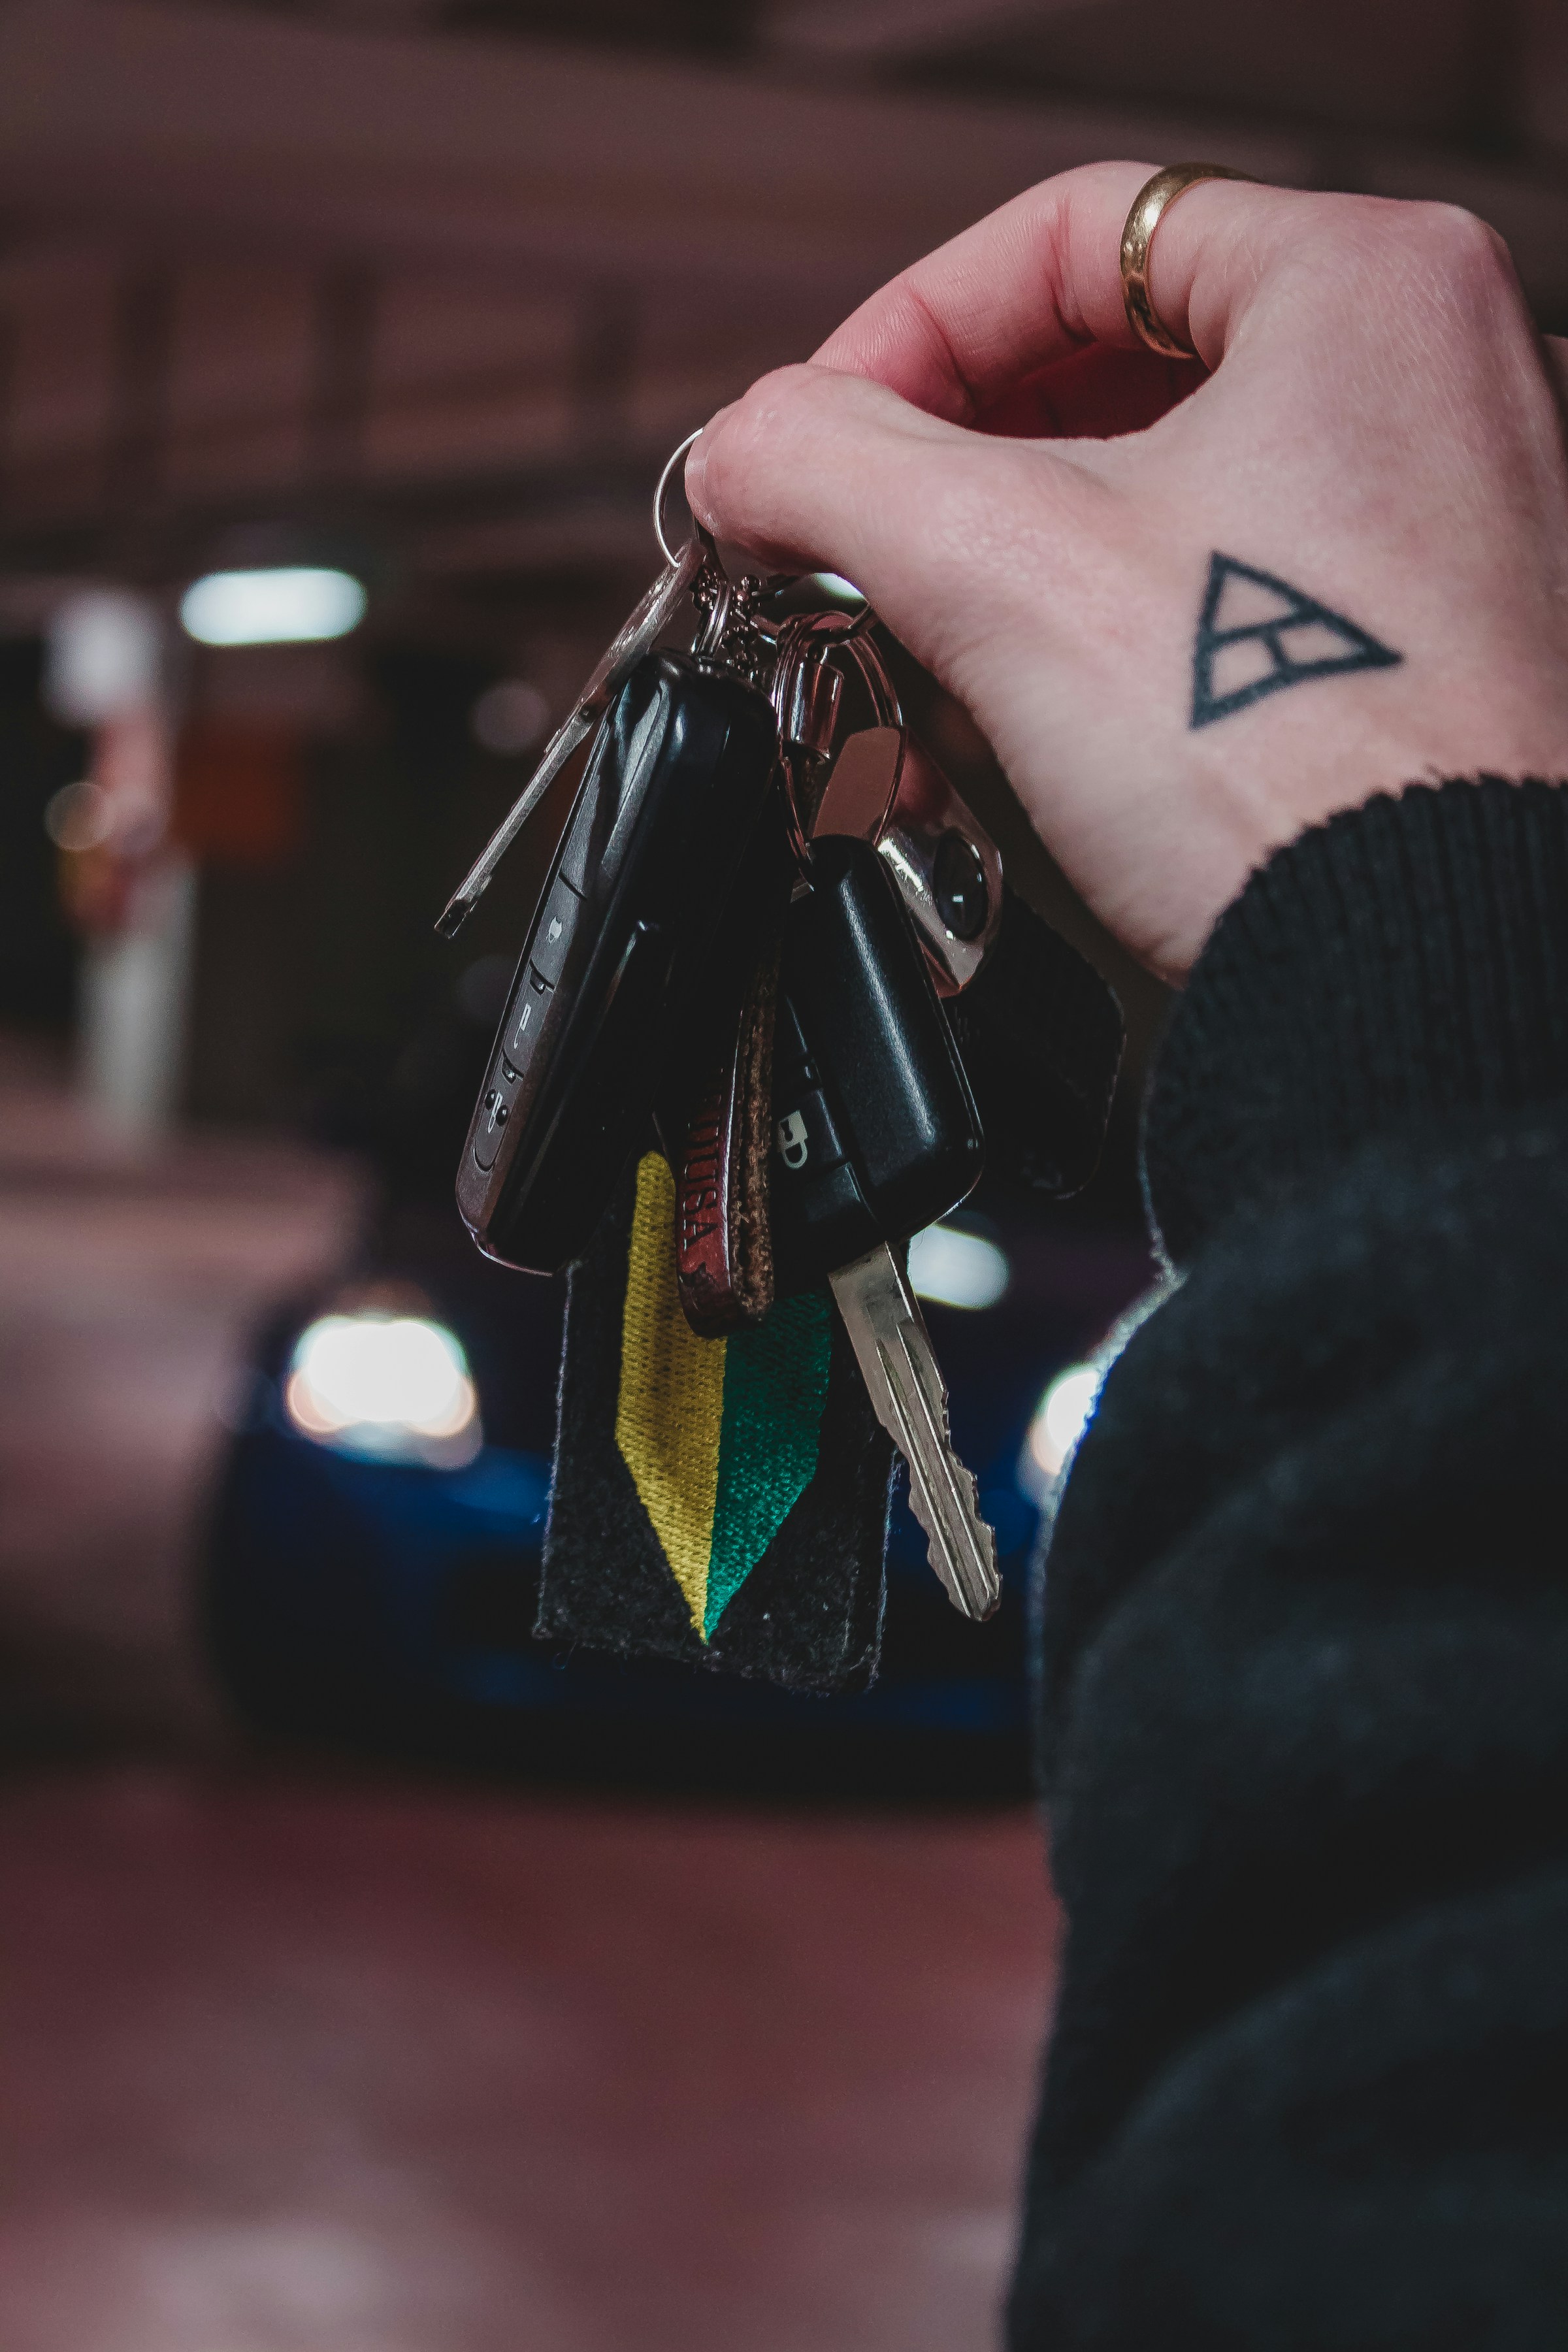 A man holding car keys | Source: Unsplash